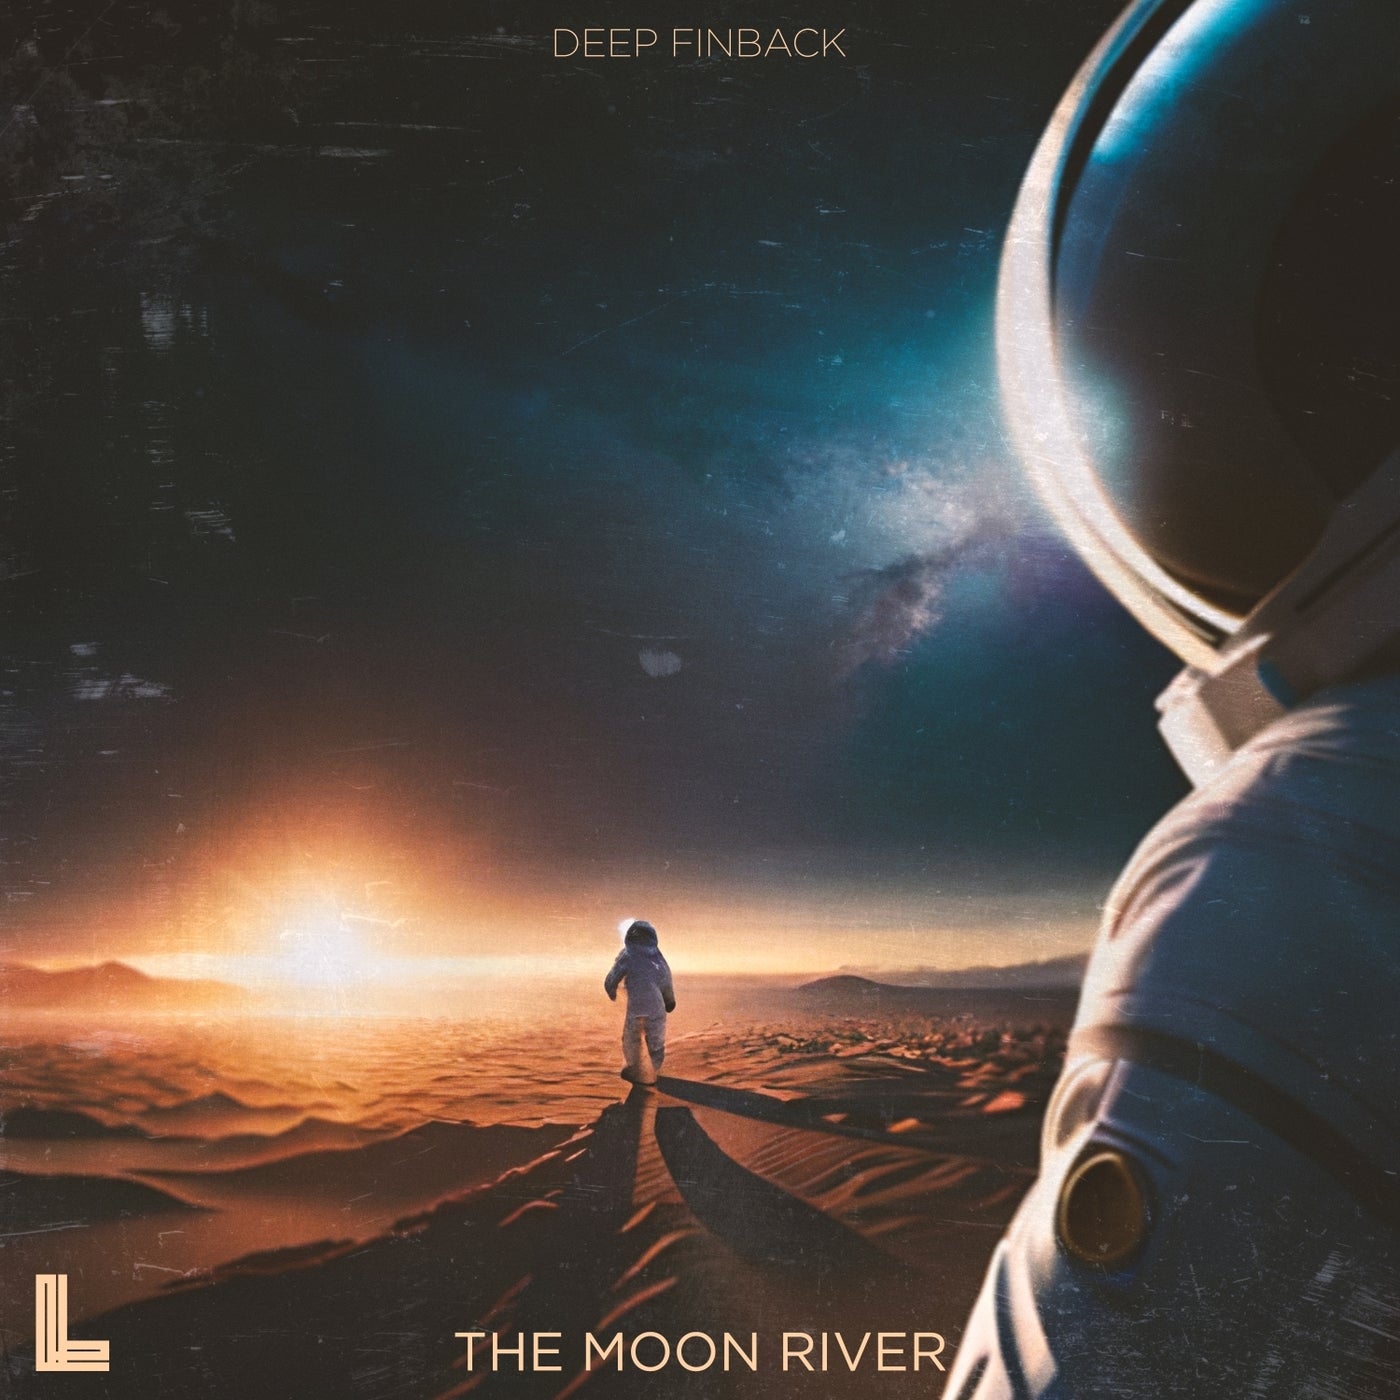 Deep Finback – The Moon River [LG225]